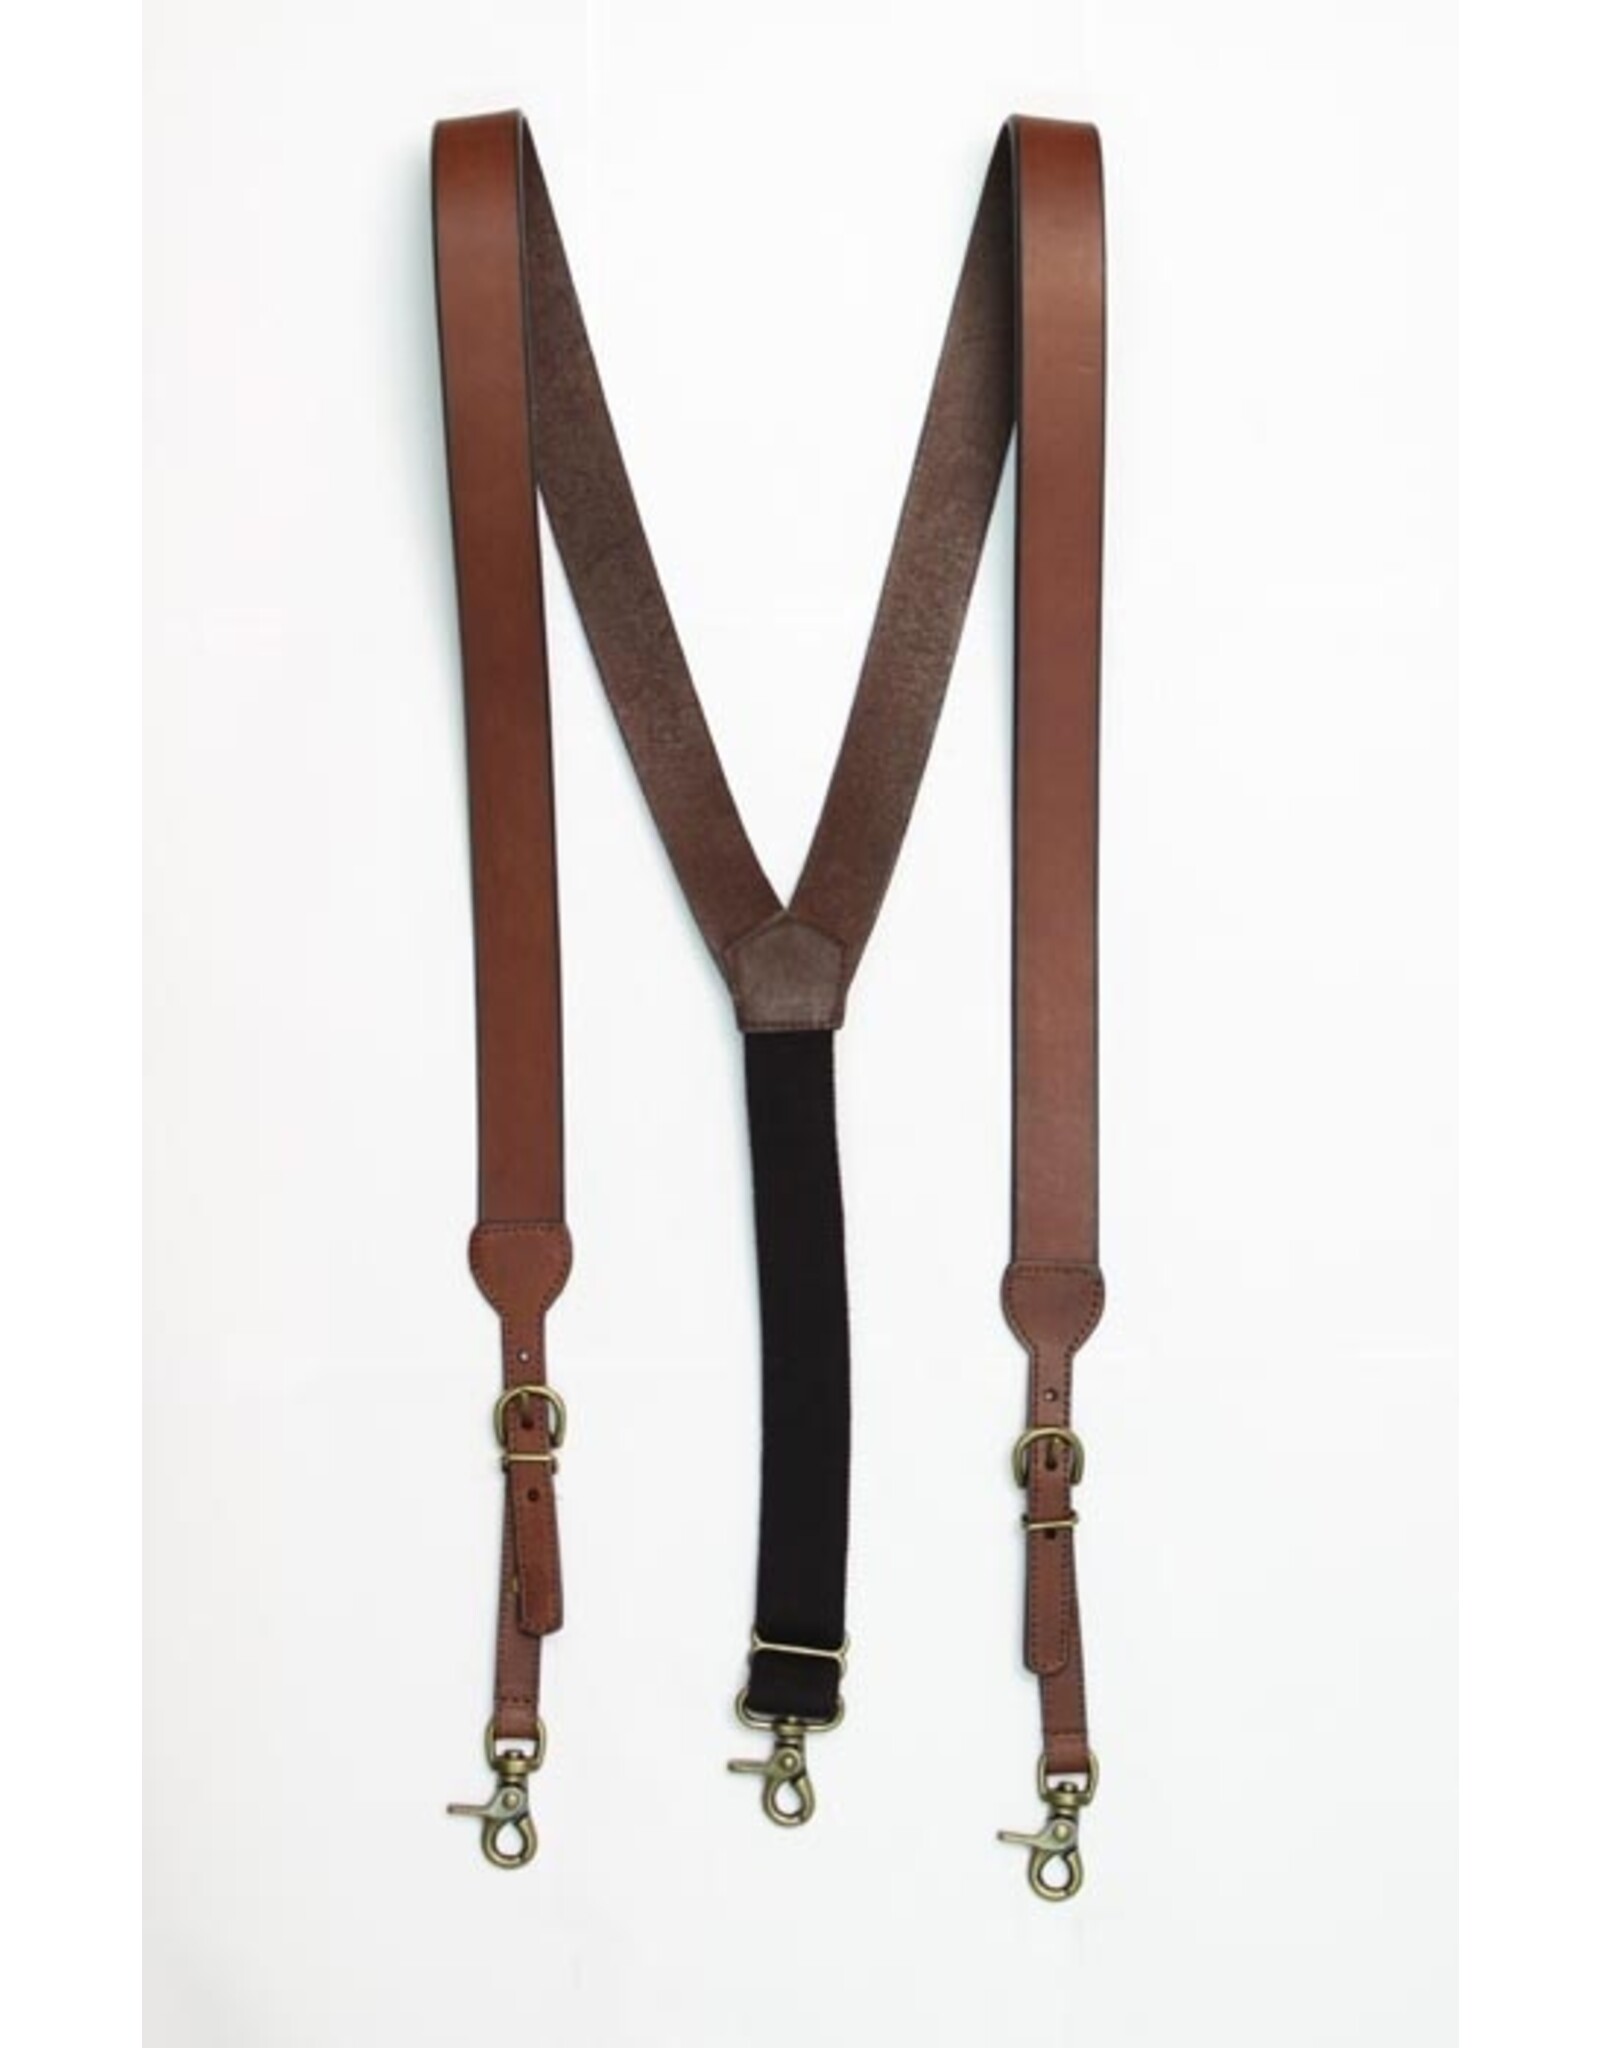 HDXtreme Brown Leather Suspenders N2712202-XL